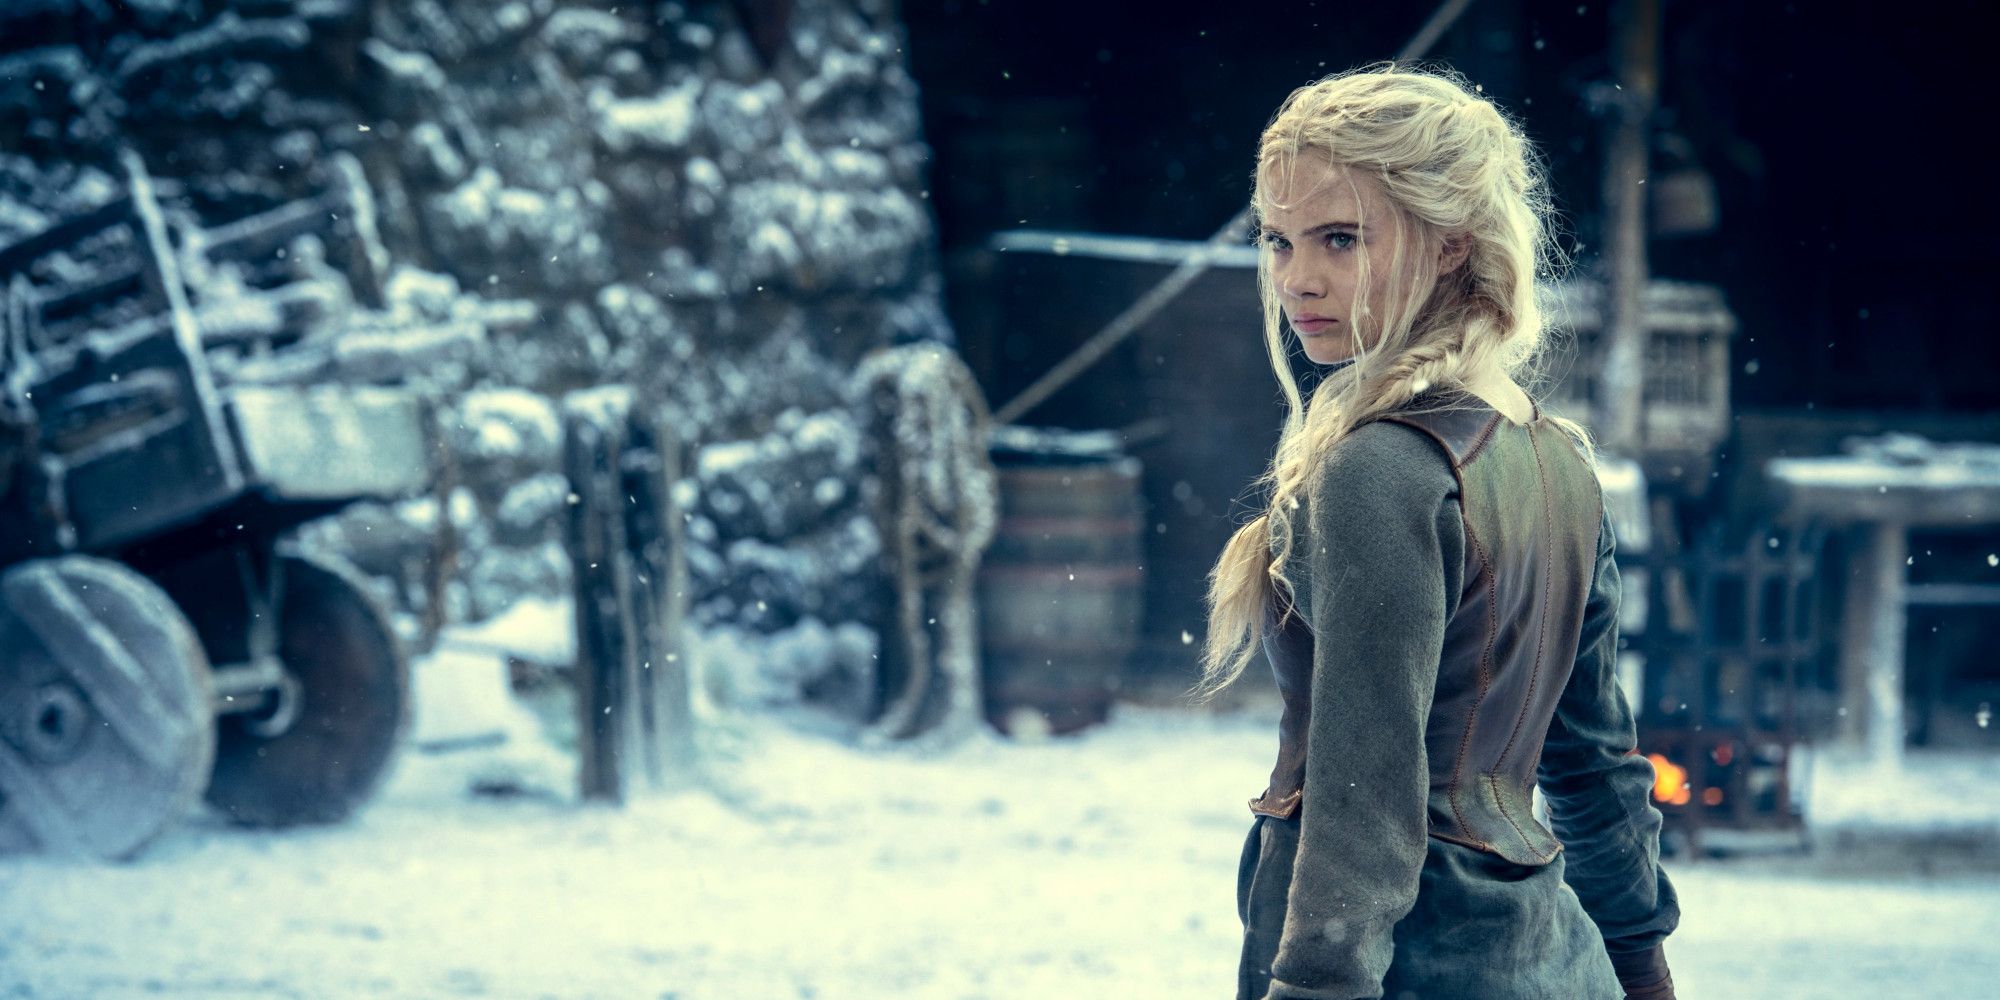 Ciri will have a bigger role in The Witcher season 2.